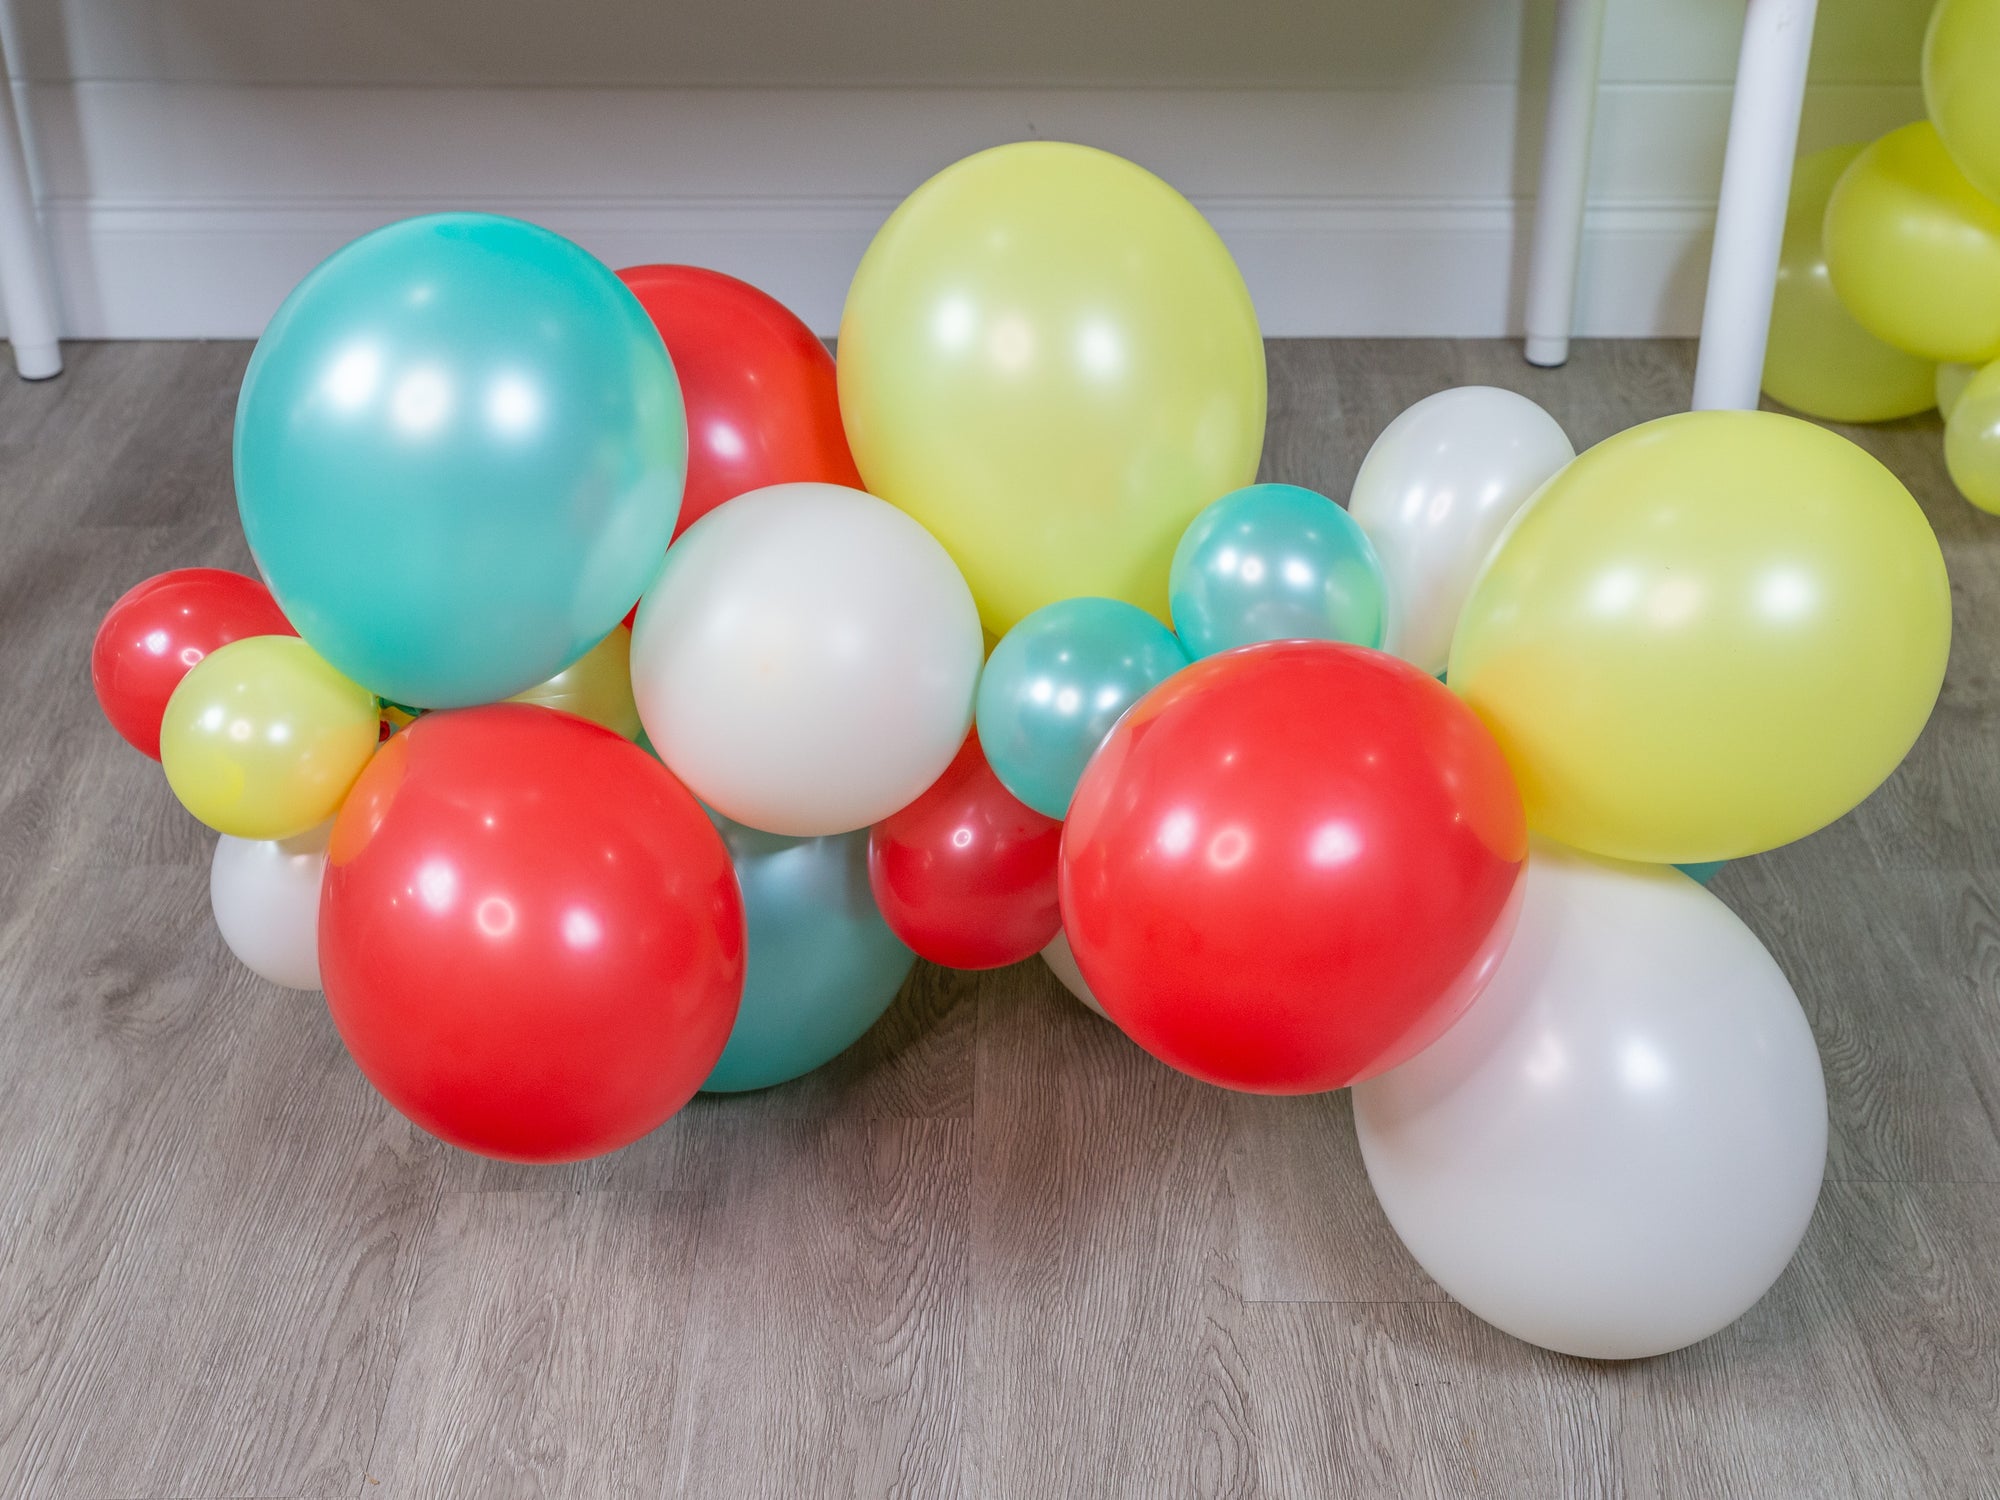 How to Make an Easy DIY Balloon Garland